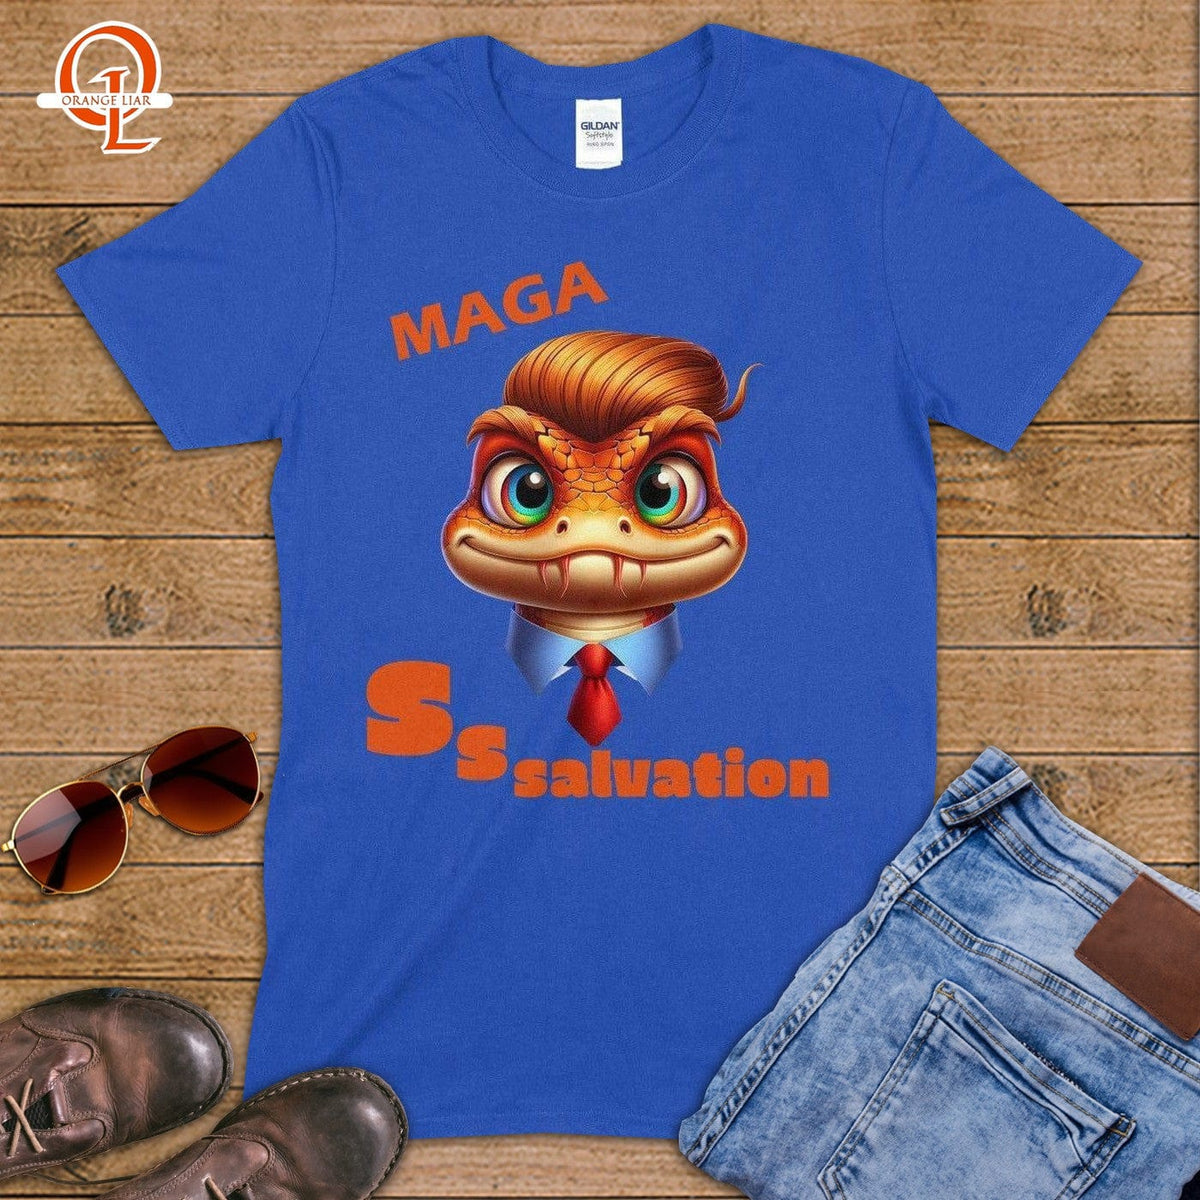 Maga Salvation ~ T-Shirt-Orange Liar